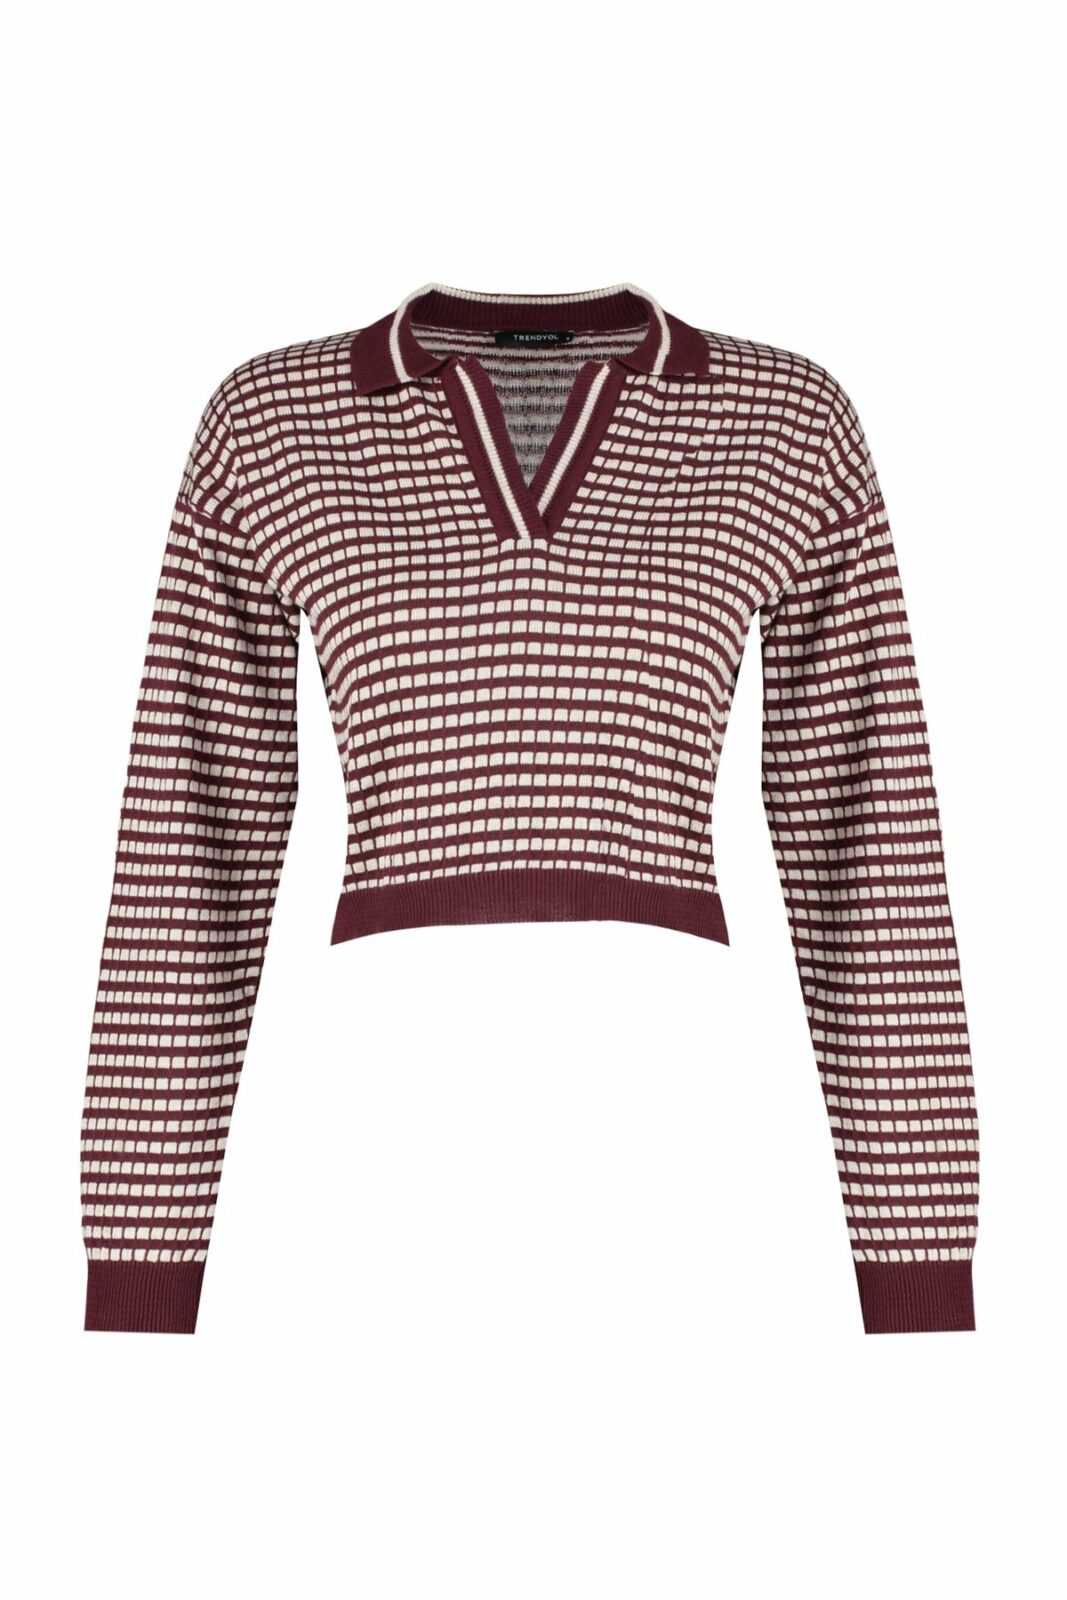 Trendyol Sweater - Burgundy -